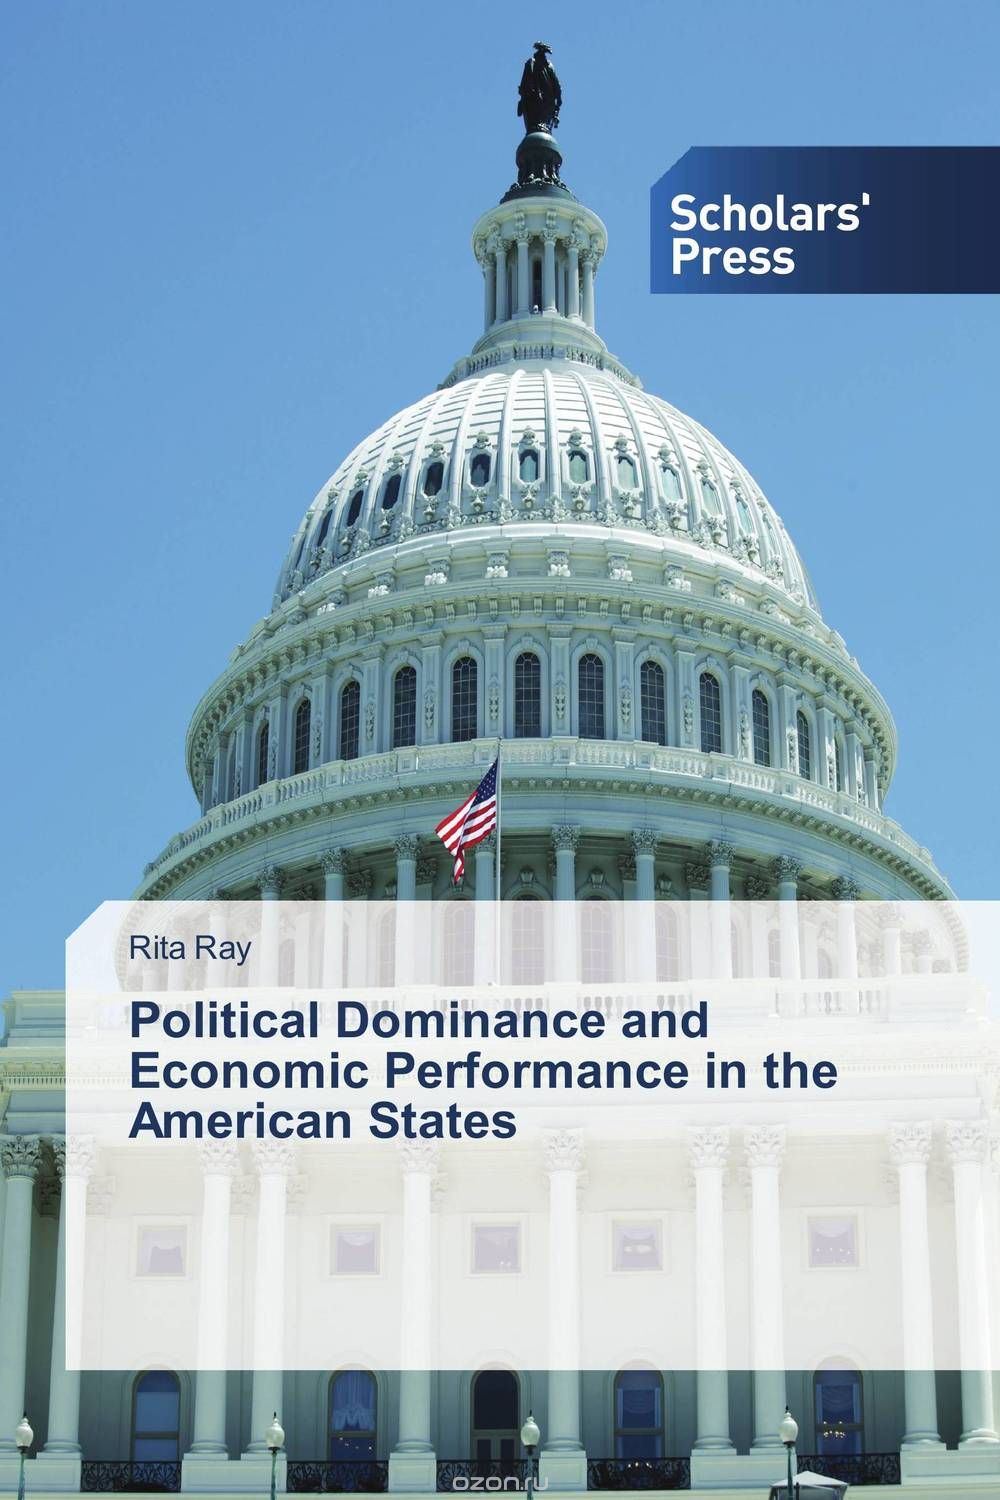 Скачать книгу "Political Dominance and Economic Performance in the American States"